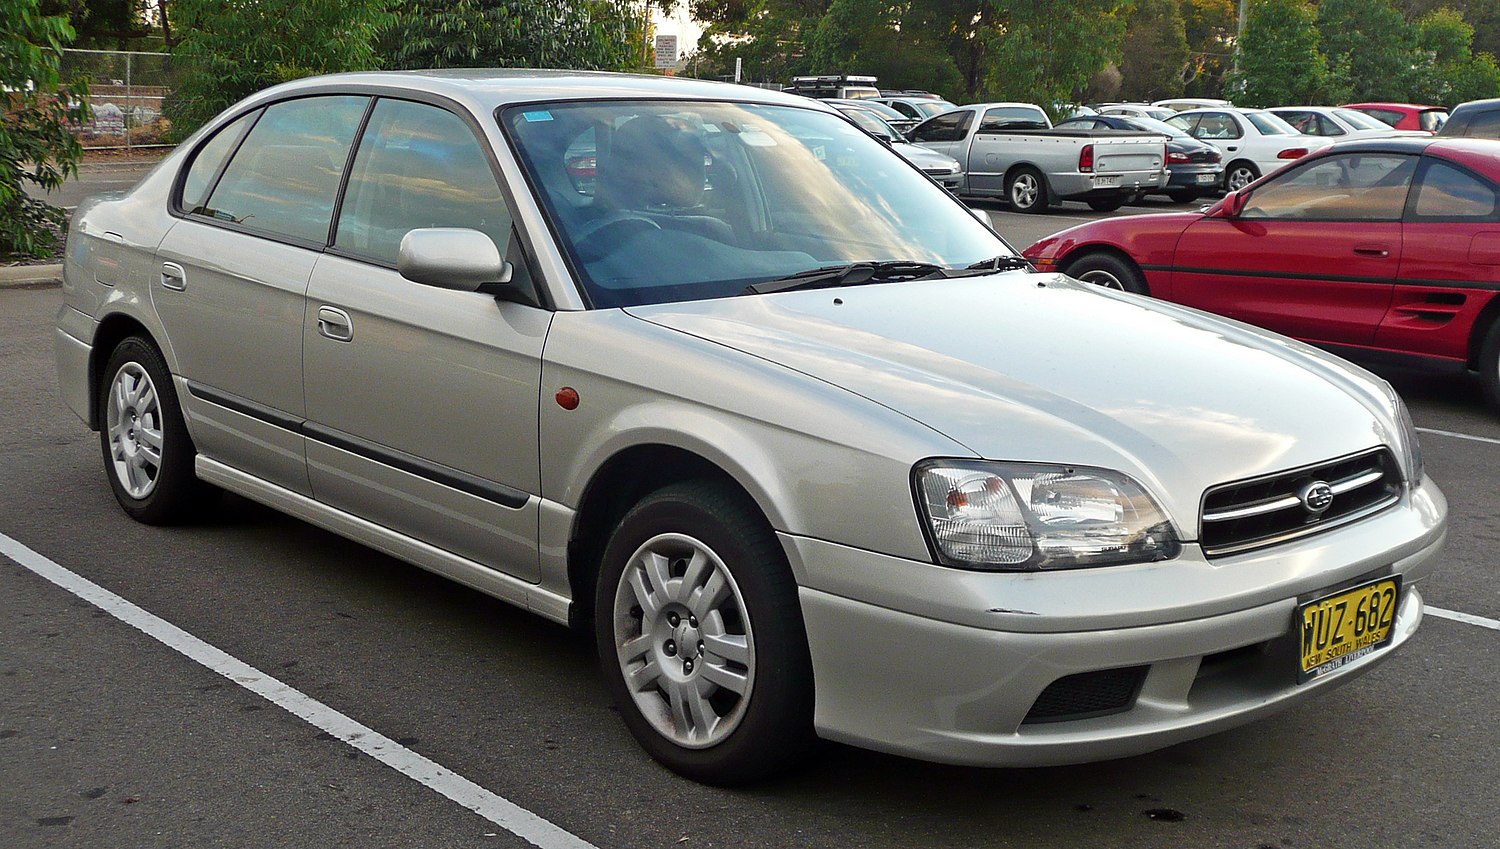 Subaru Impreza WRX STI (2006), Need for Speed Wiki